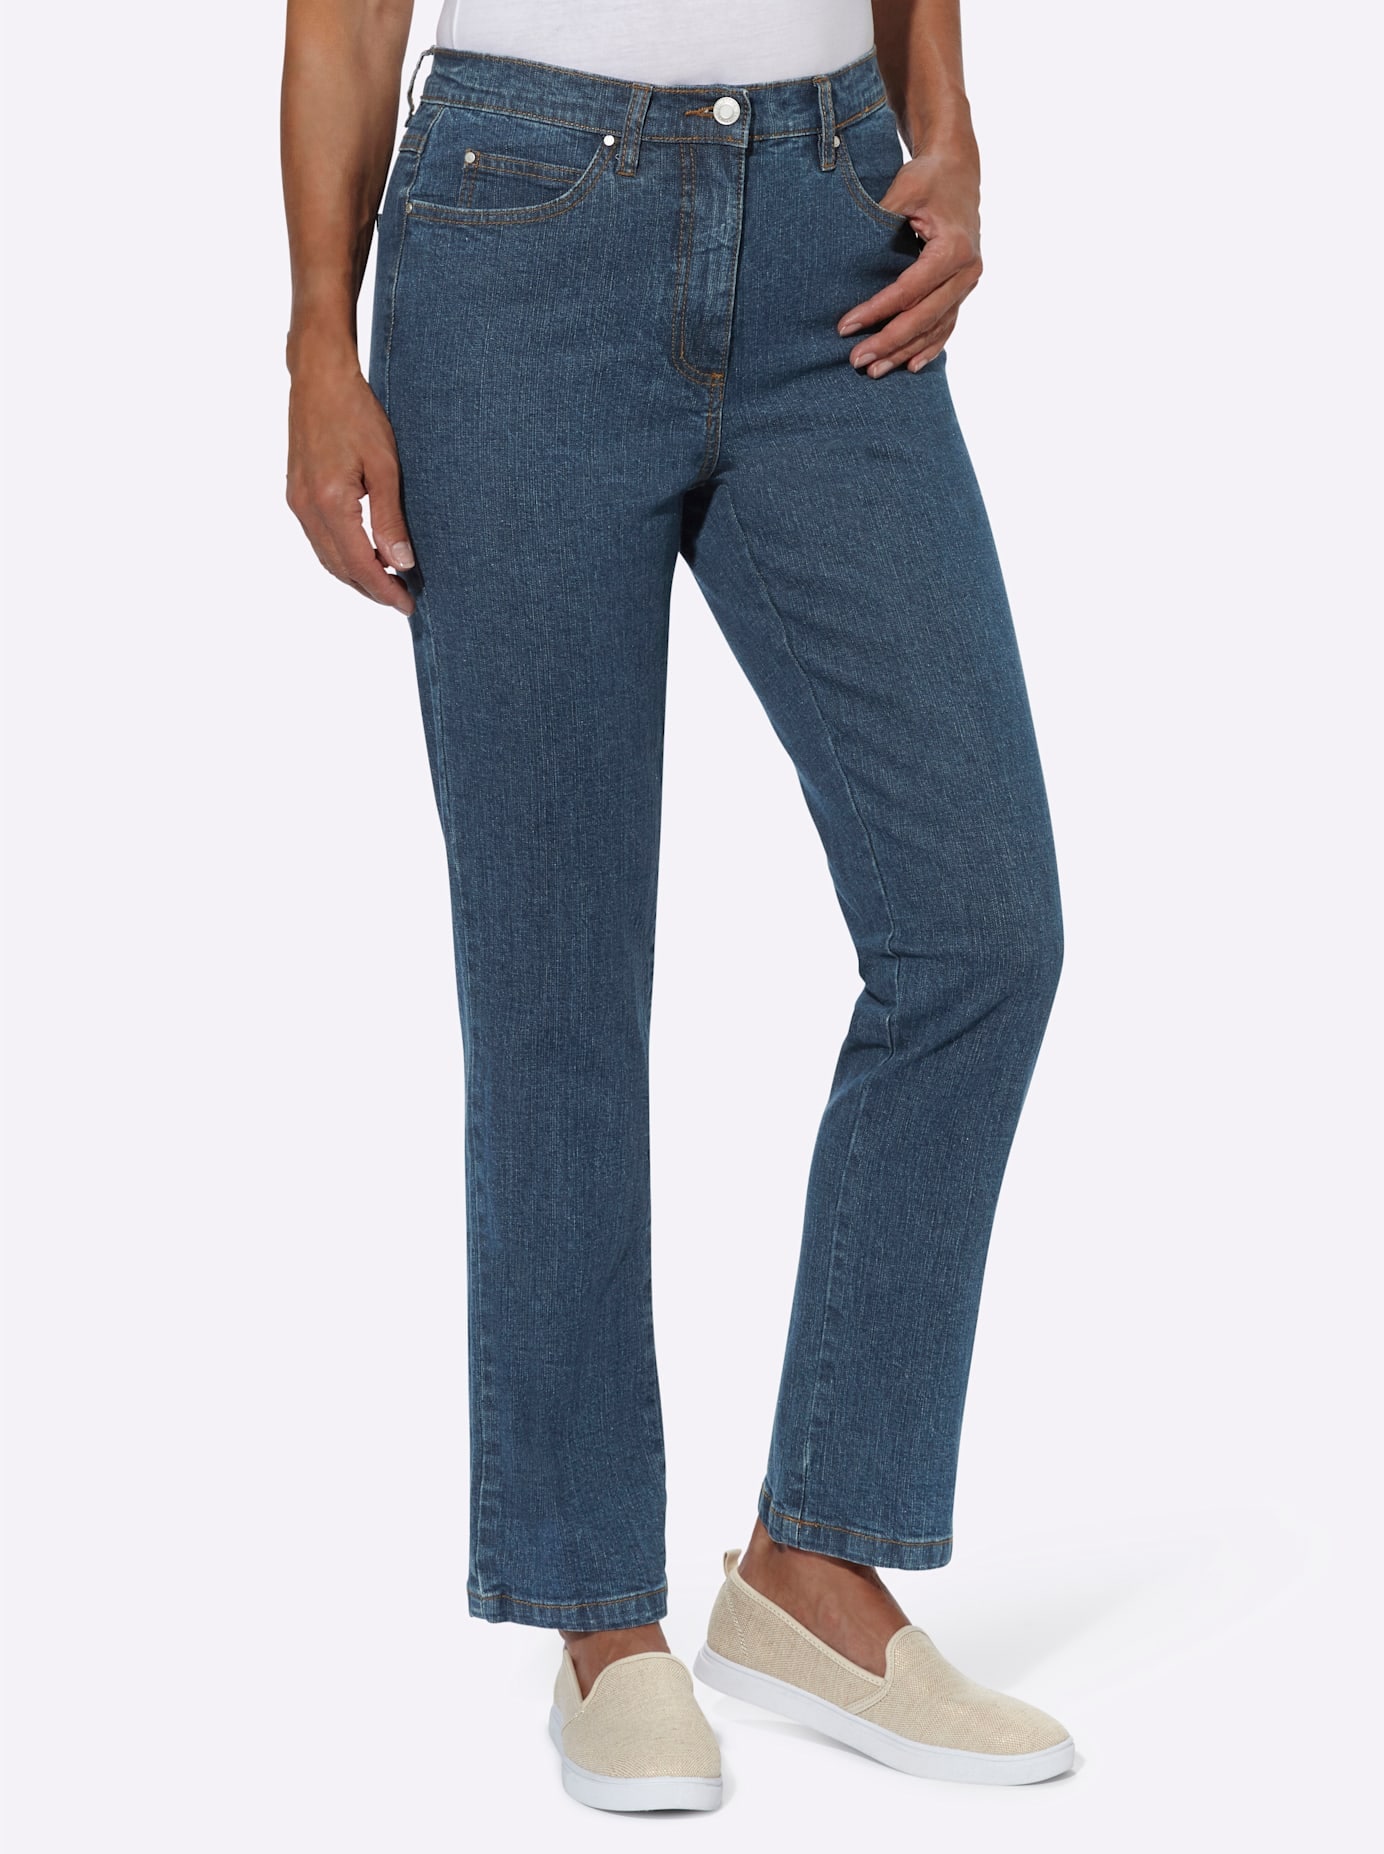 (1 | tlg.) bestellen Looks BAUR 5-Pocket-Jeans, Casual